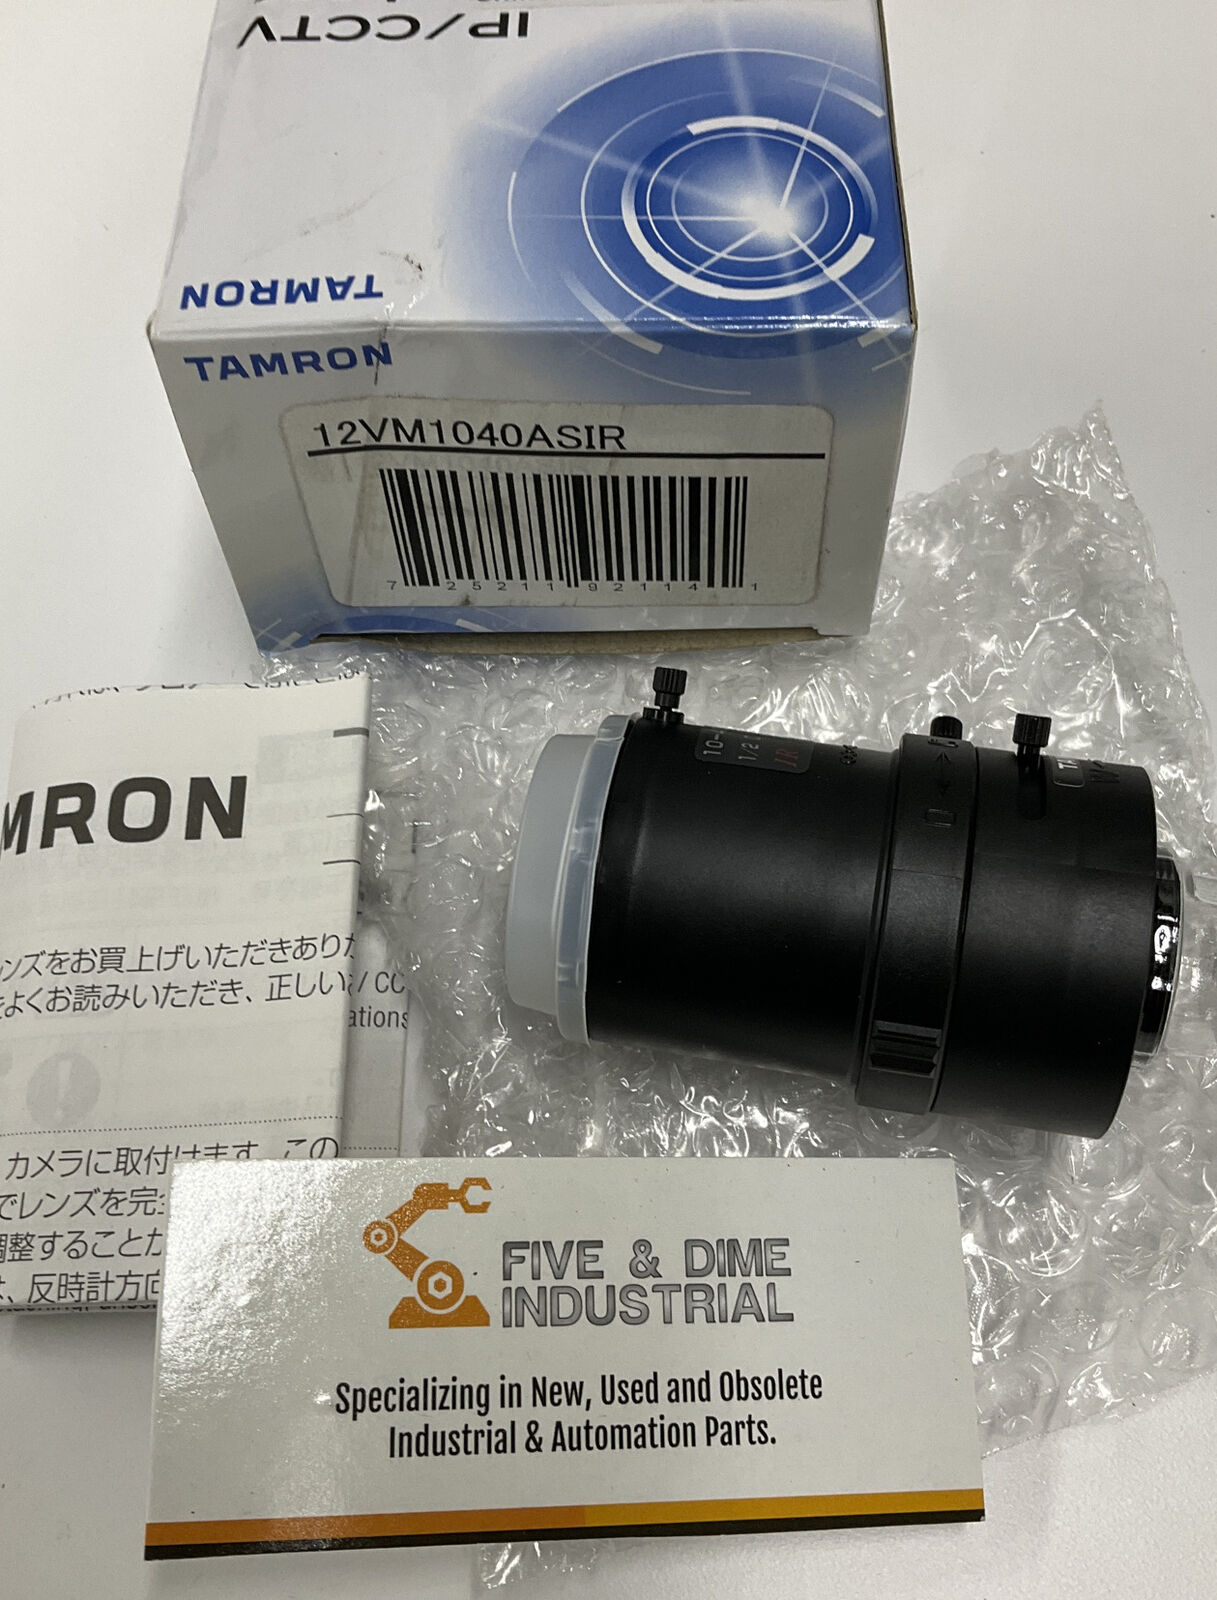 Tamron 12VM1040ASIR NEW 40mm C mount Lens w/ Aperture & Focus Lock (RE213)